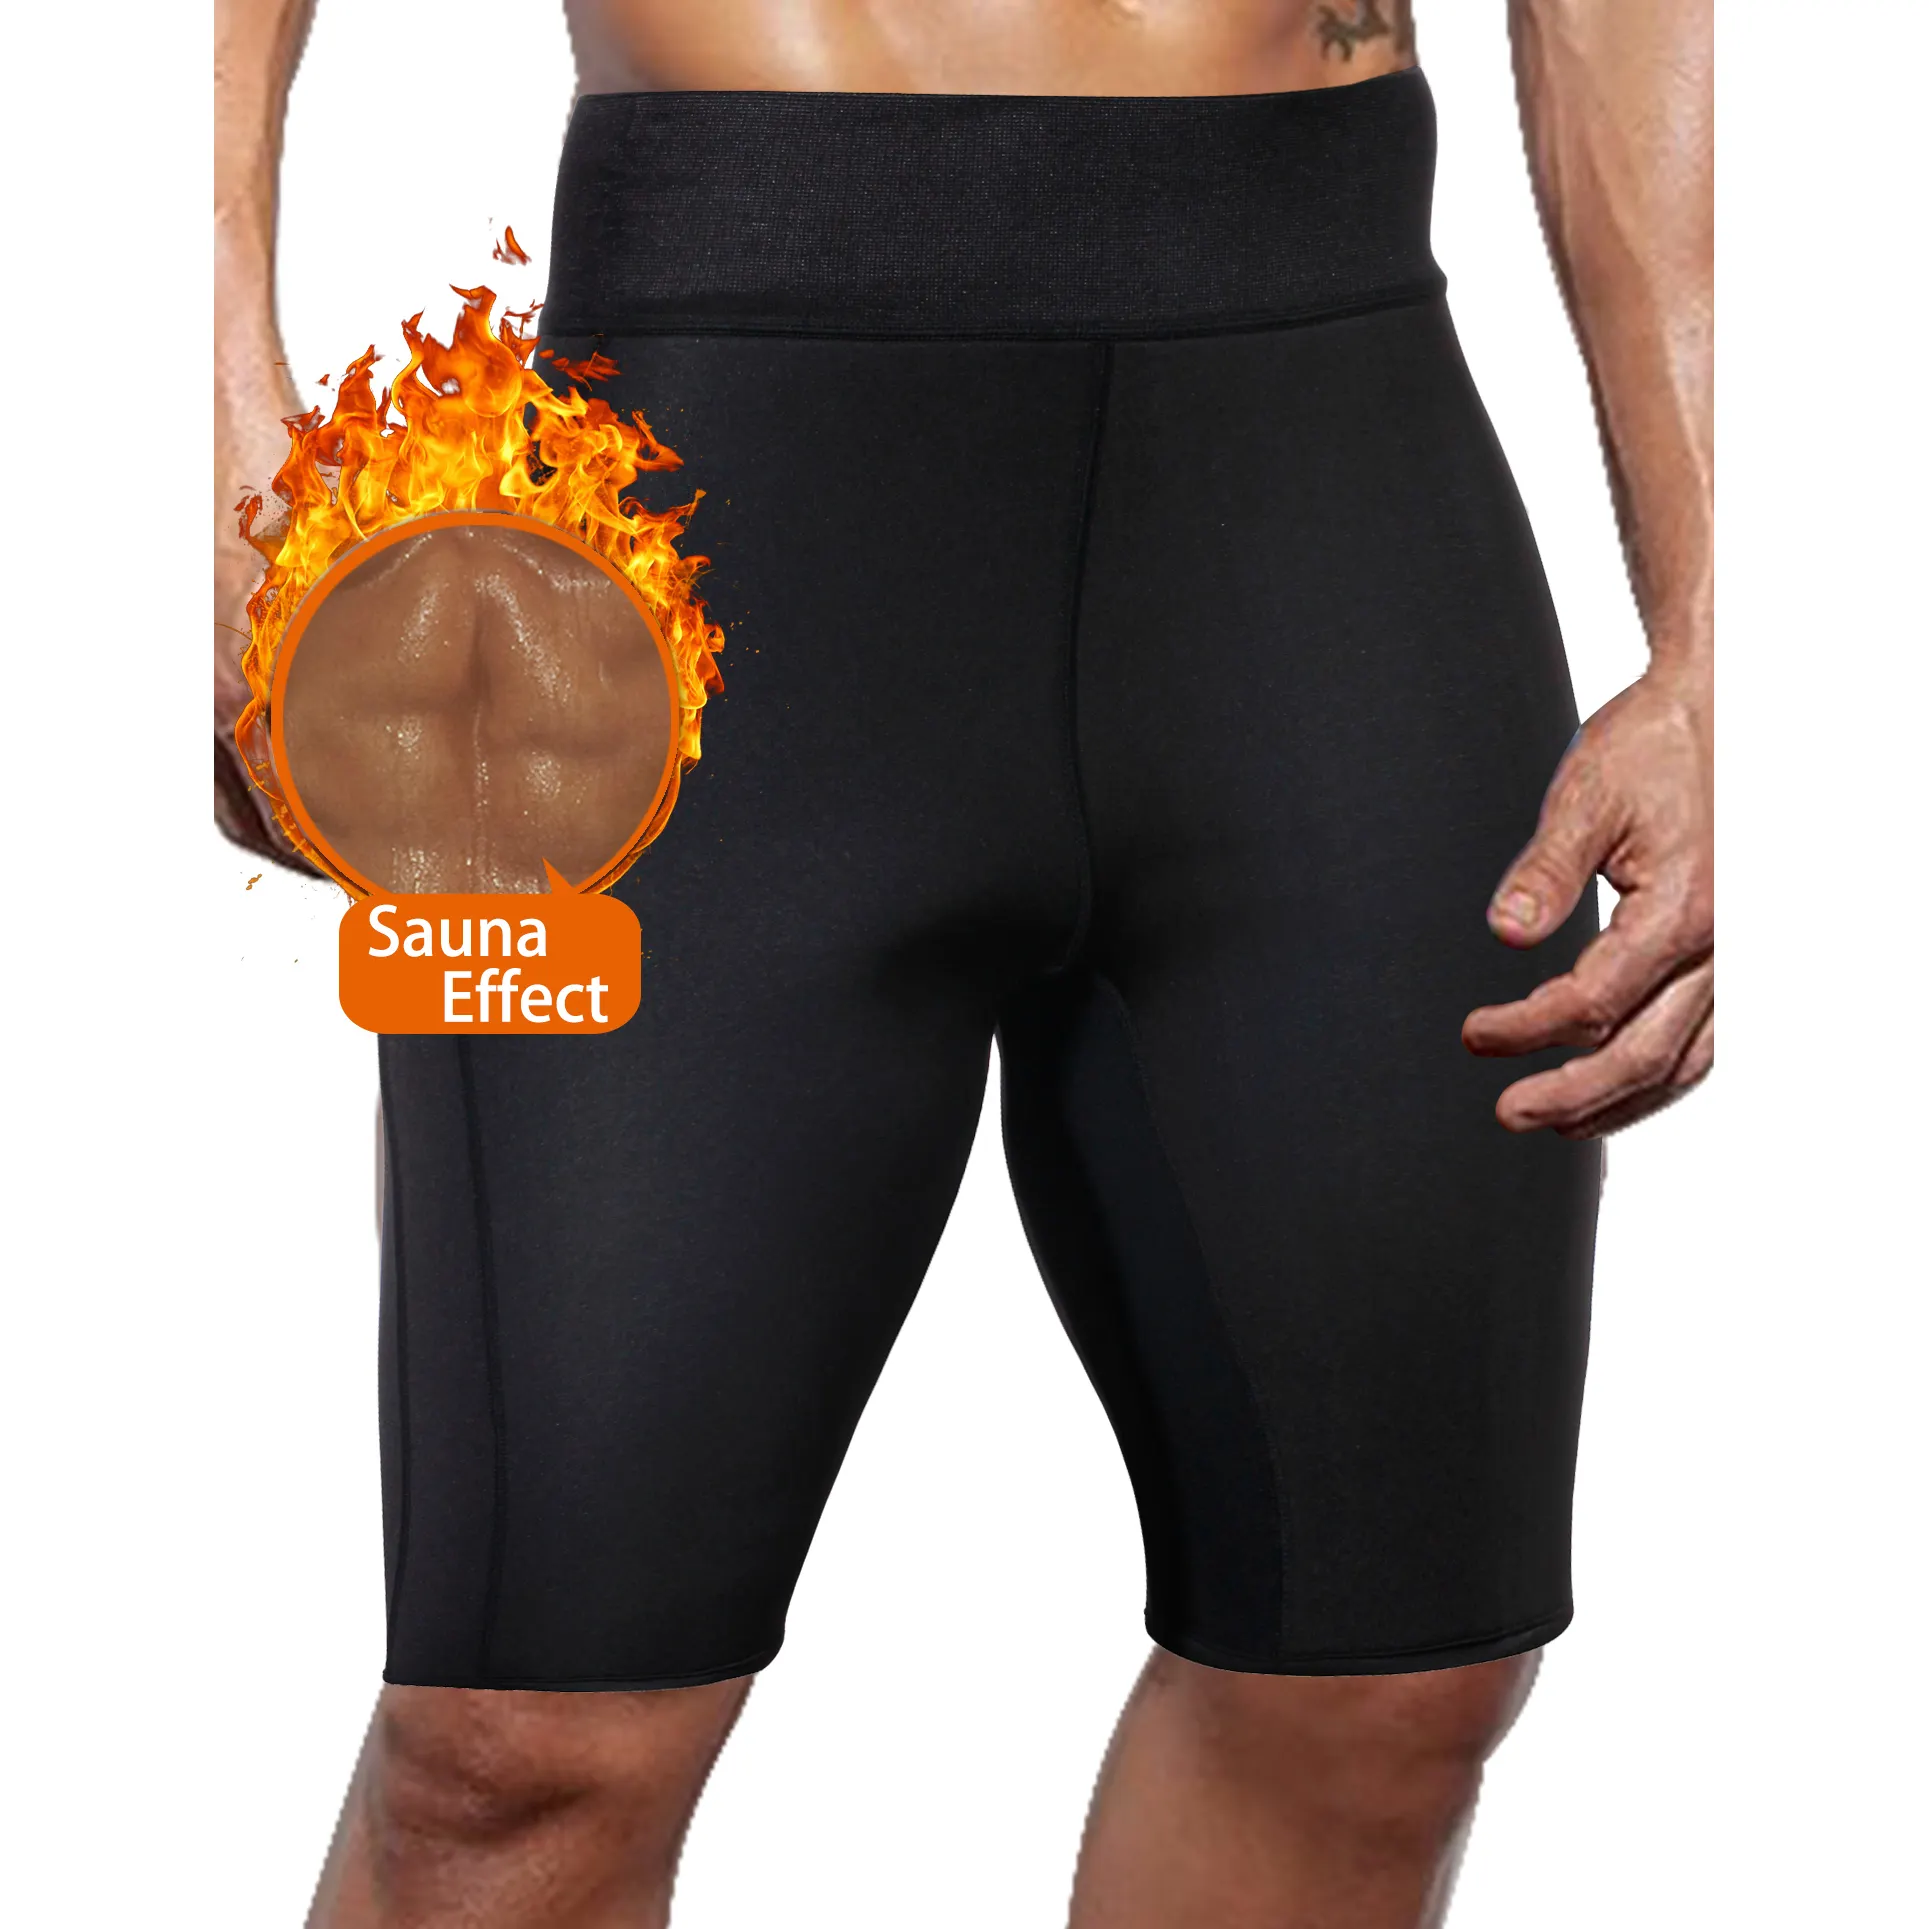 Men Body Shaper Sport Fitness Shorts Neoprene Hot Sweat Thermo Sauna Pants with Pockets